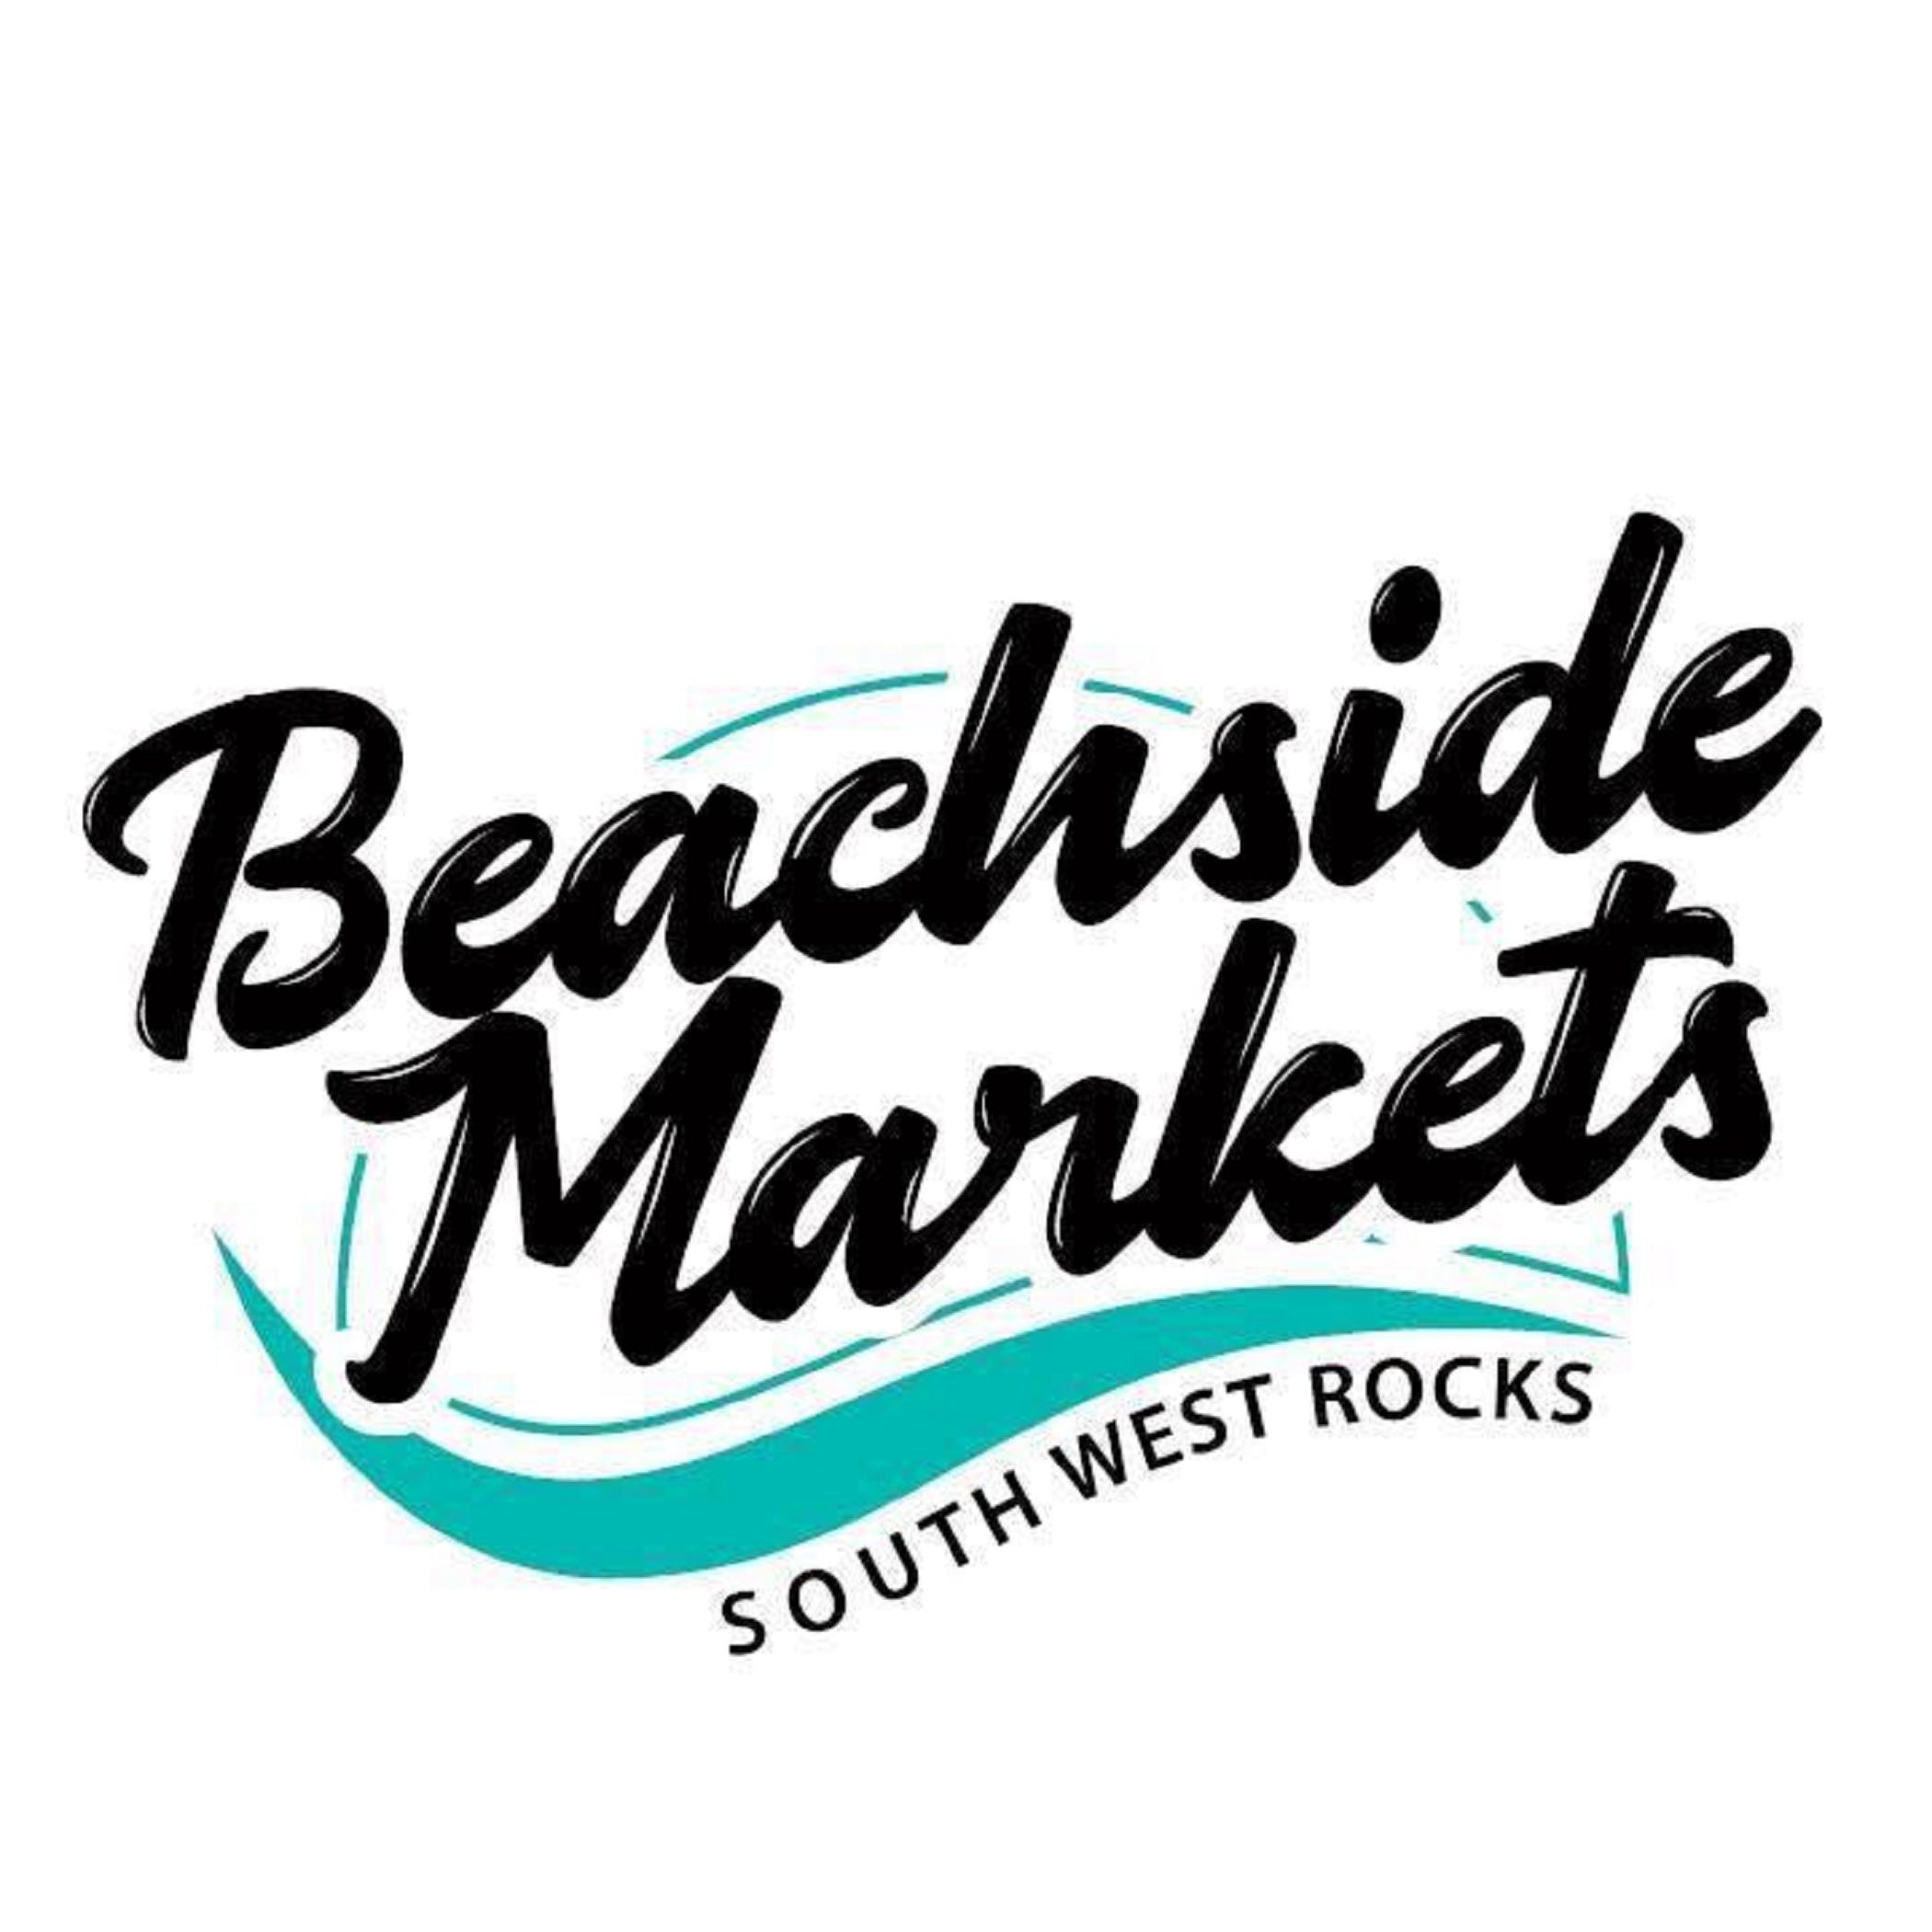 Beachside Markets South West Rocks - Townsville Tourism